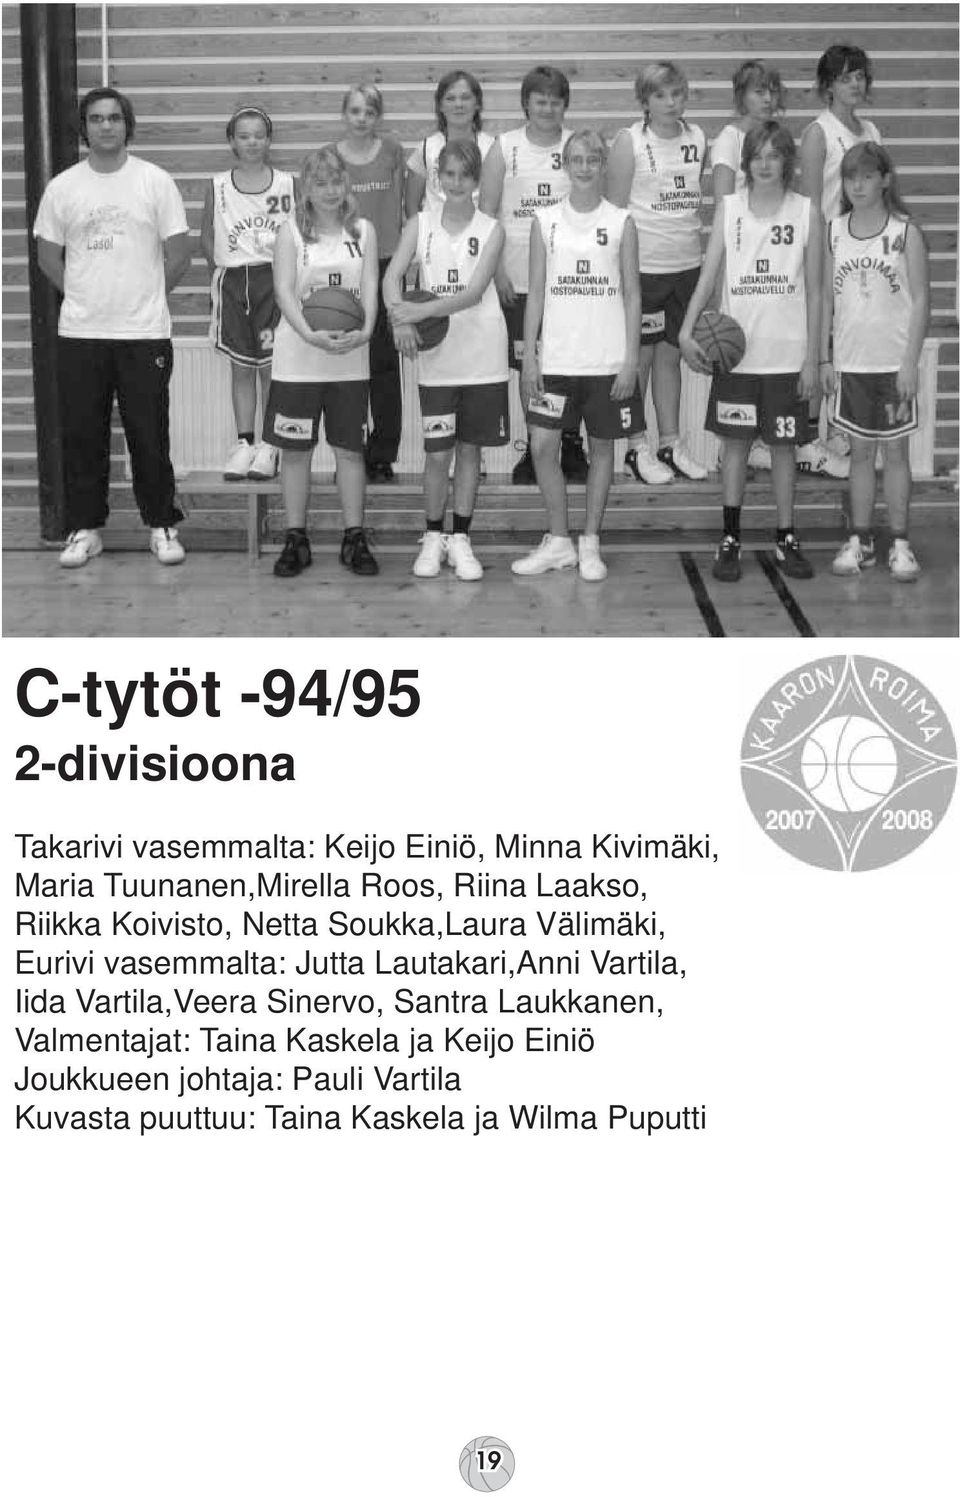 vasemmalta: Jutta Lautakari,Anni Vartila, Iida Vartila,Veera Sinervo, Santra Laukkanen,